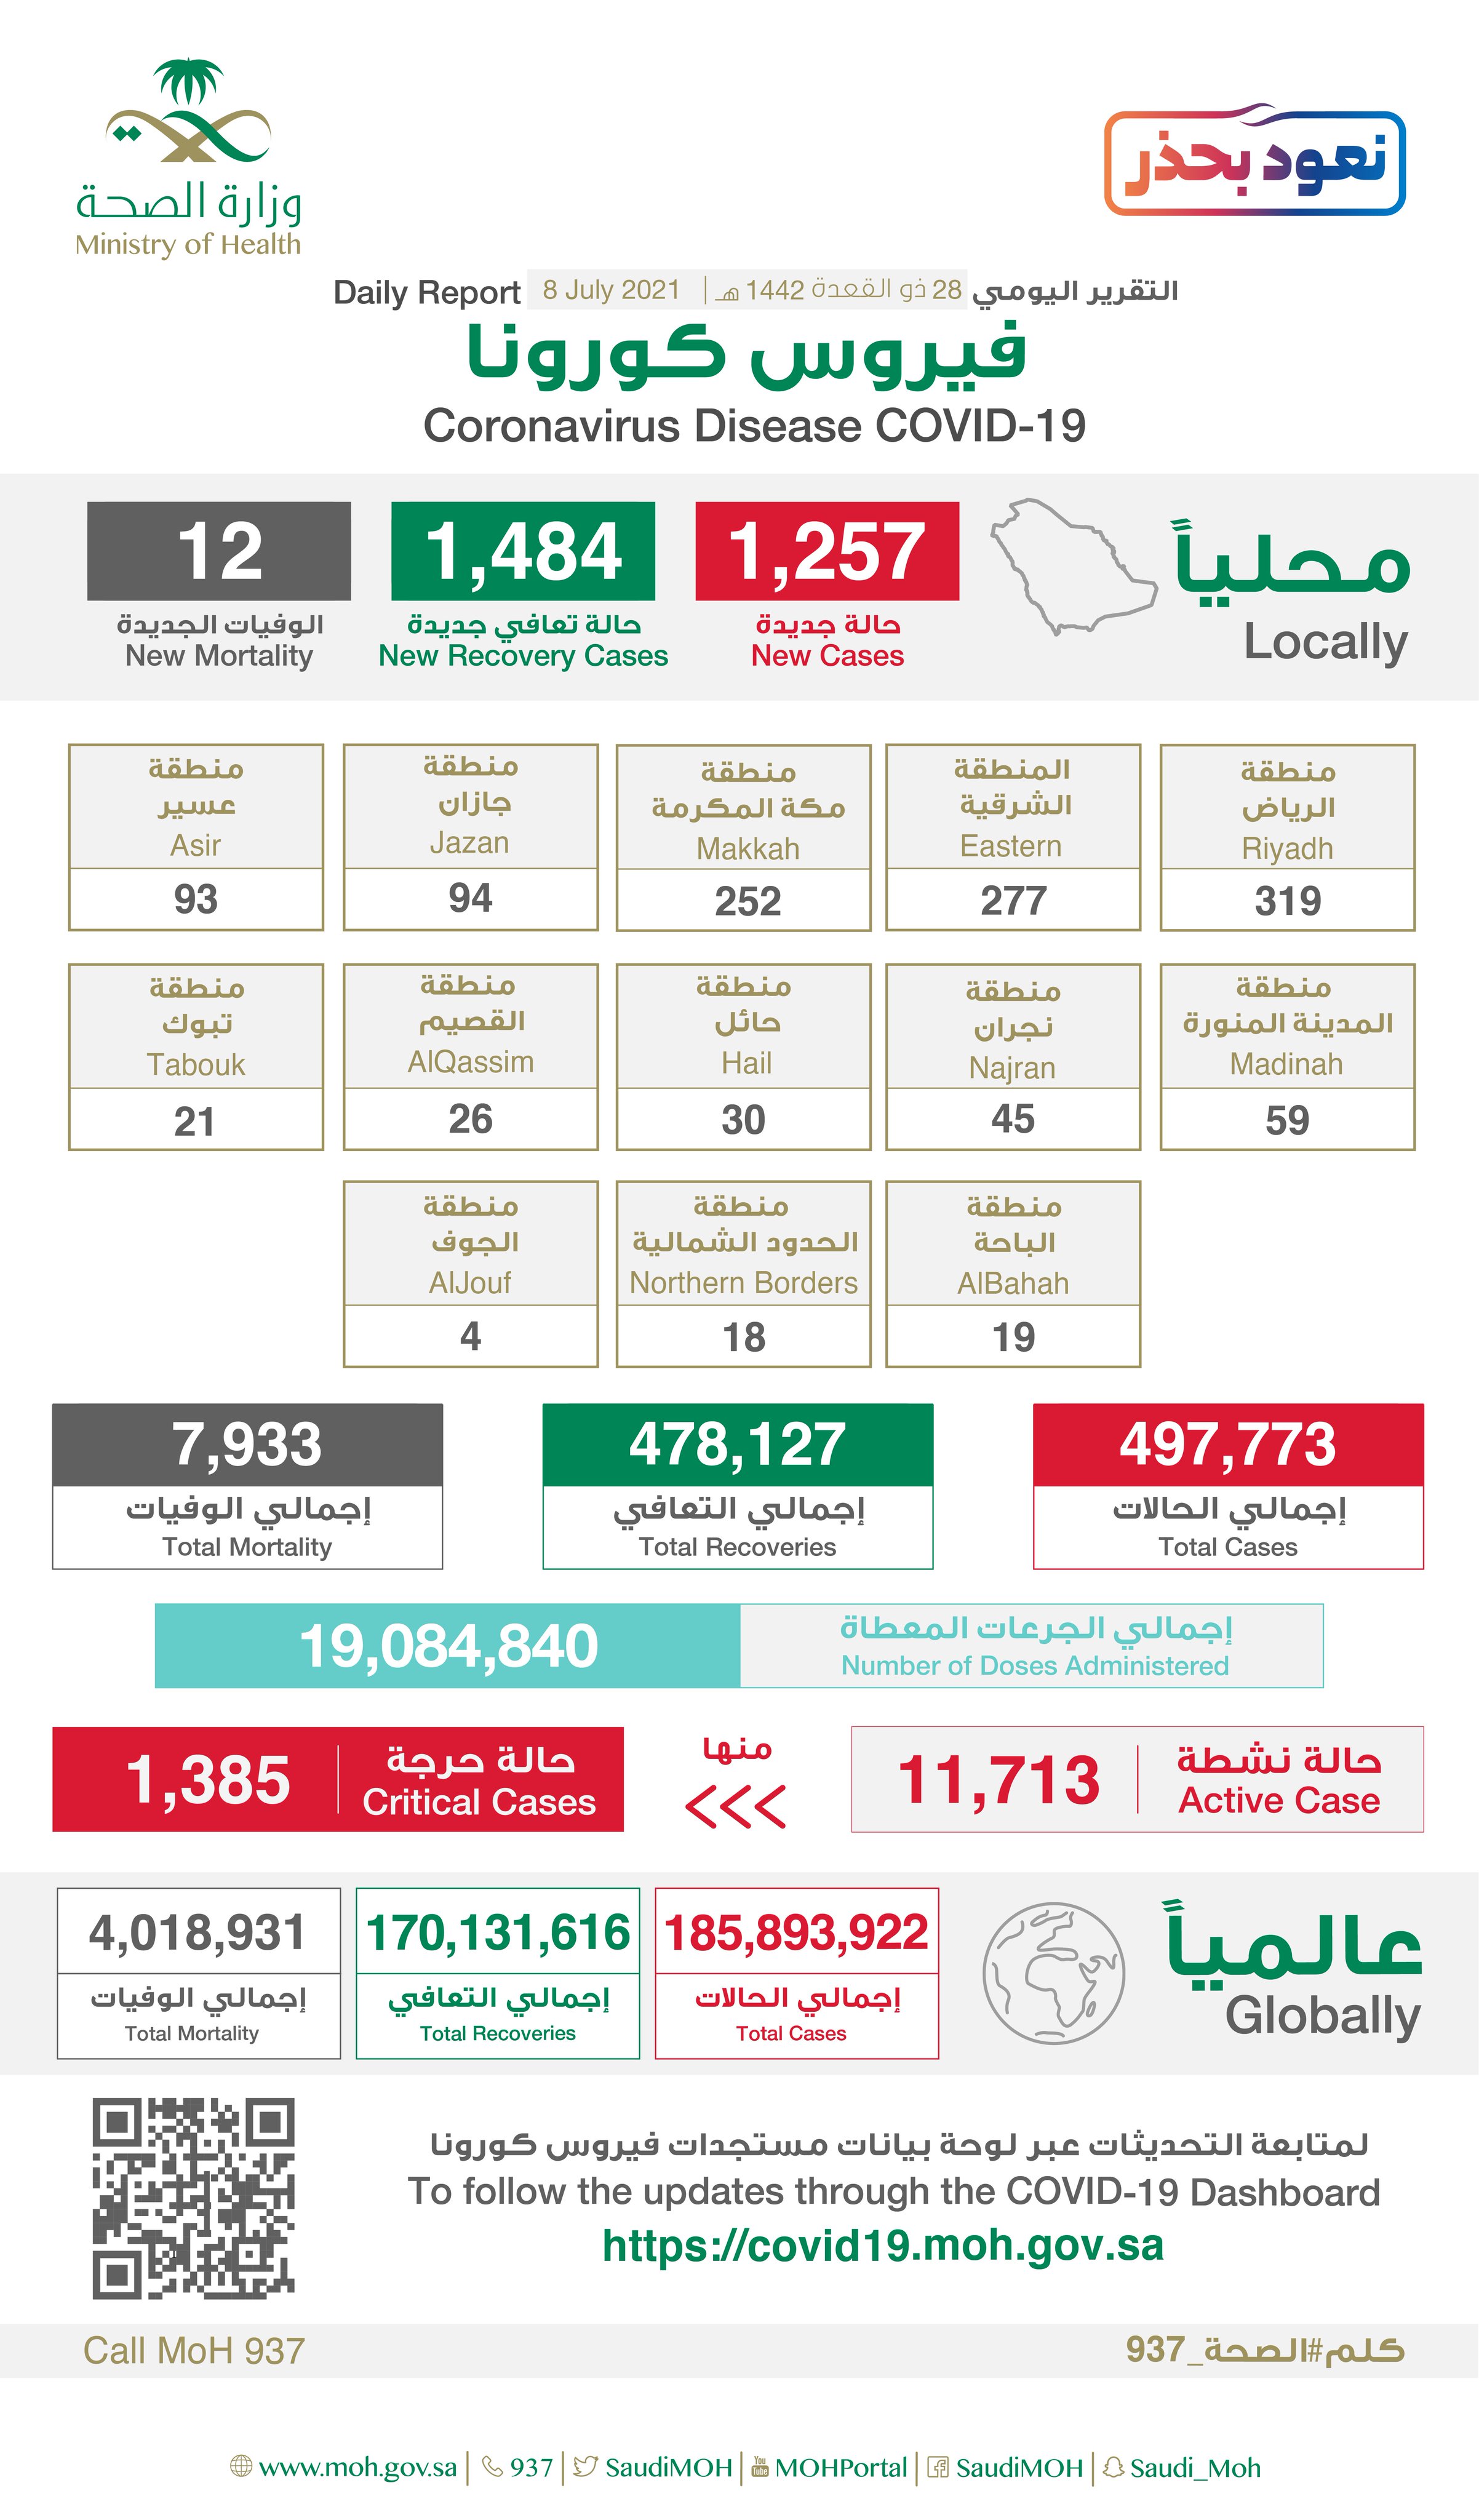 Saudi Arabia Coronavirus : Total Cases :497,773 , New Cases :1,257, Cured : 478,127 , Deaths: 7,933, Active Cases : 11,713